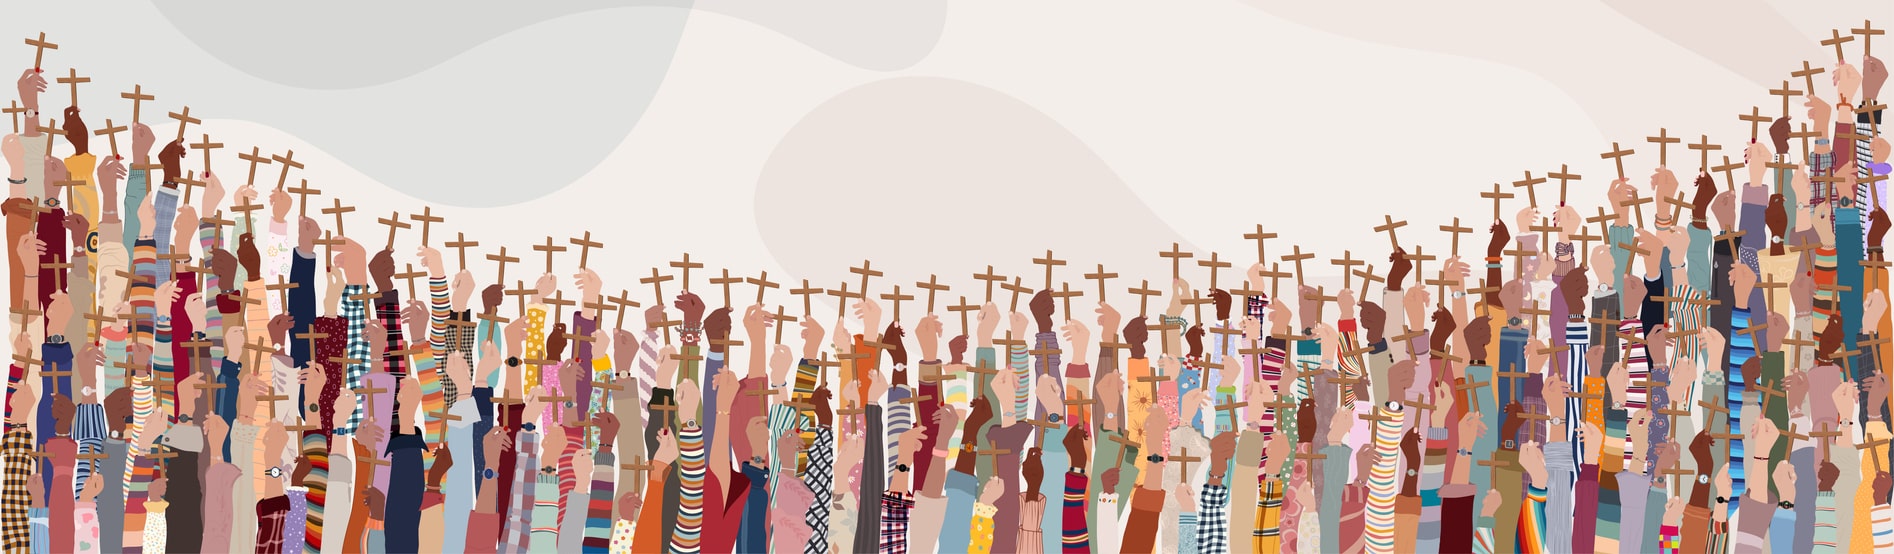 people of different ethnicities raising crosses